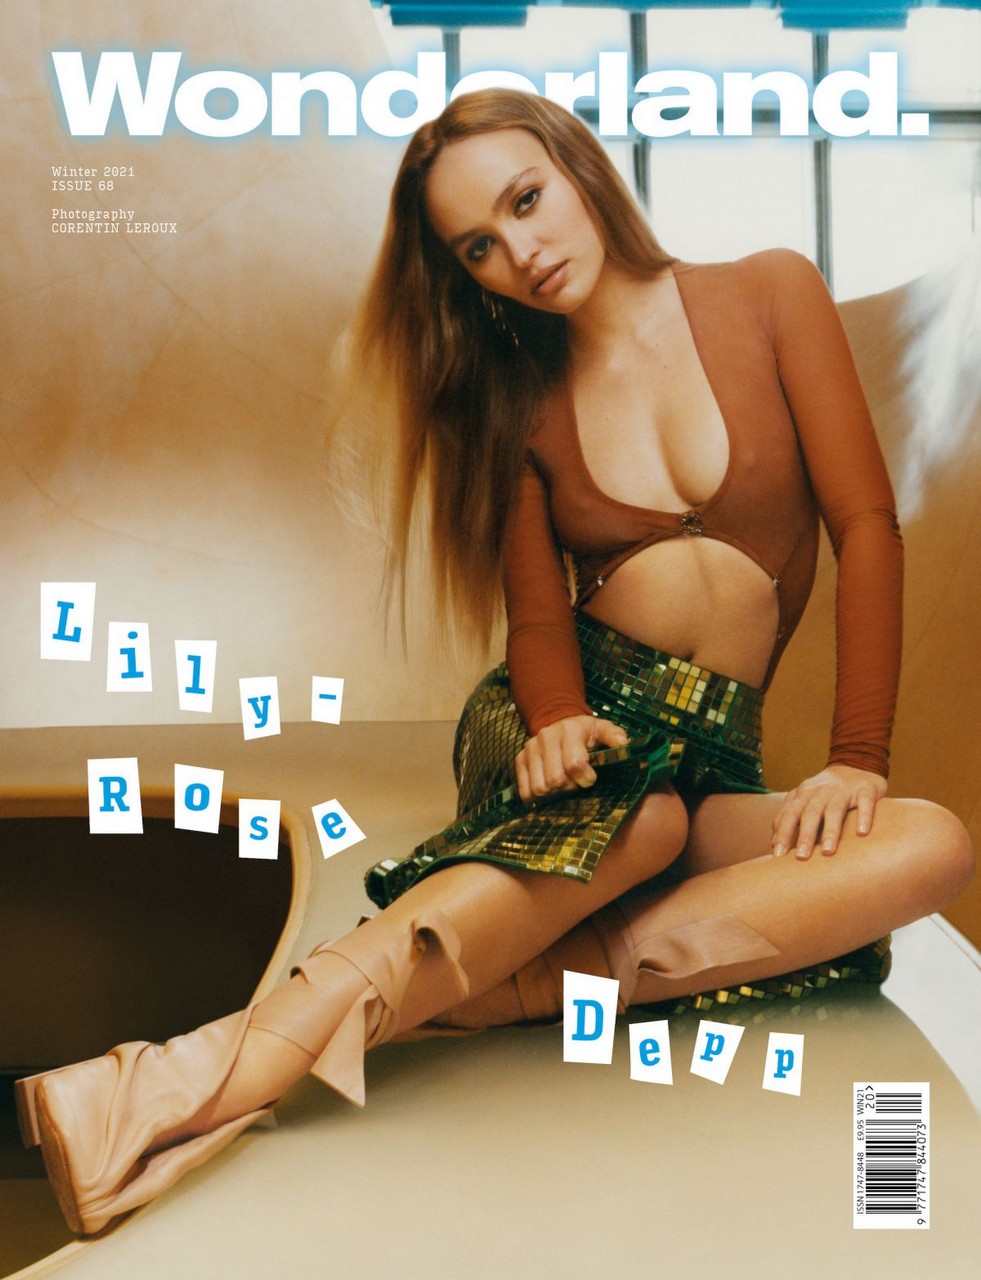 Lily Rose Depp For Wonderland Magazine Winter 2021 Issue